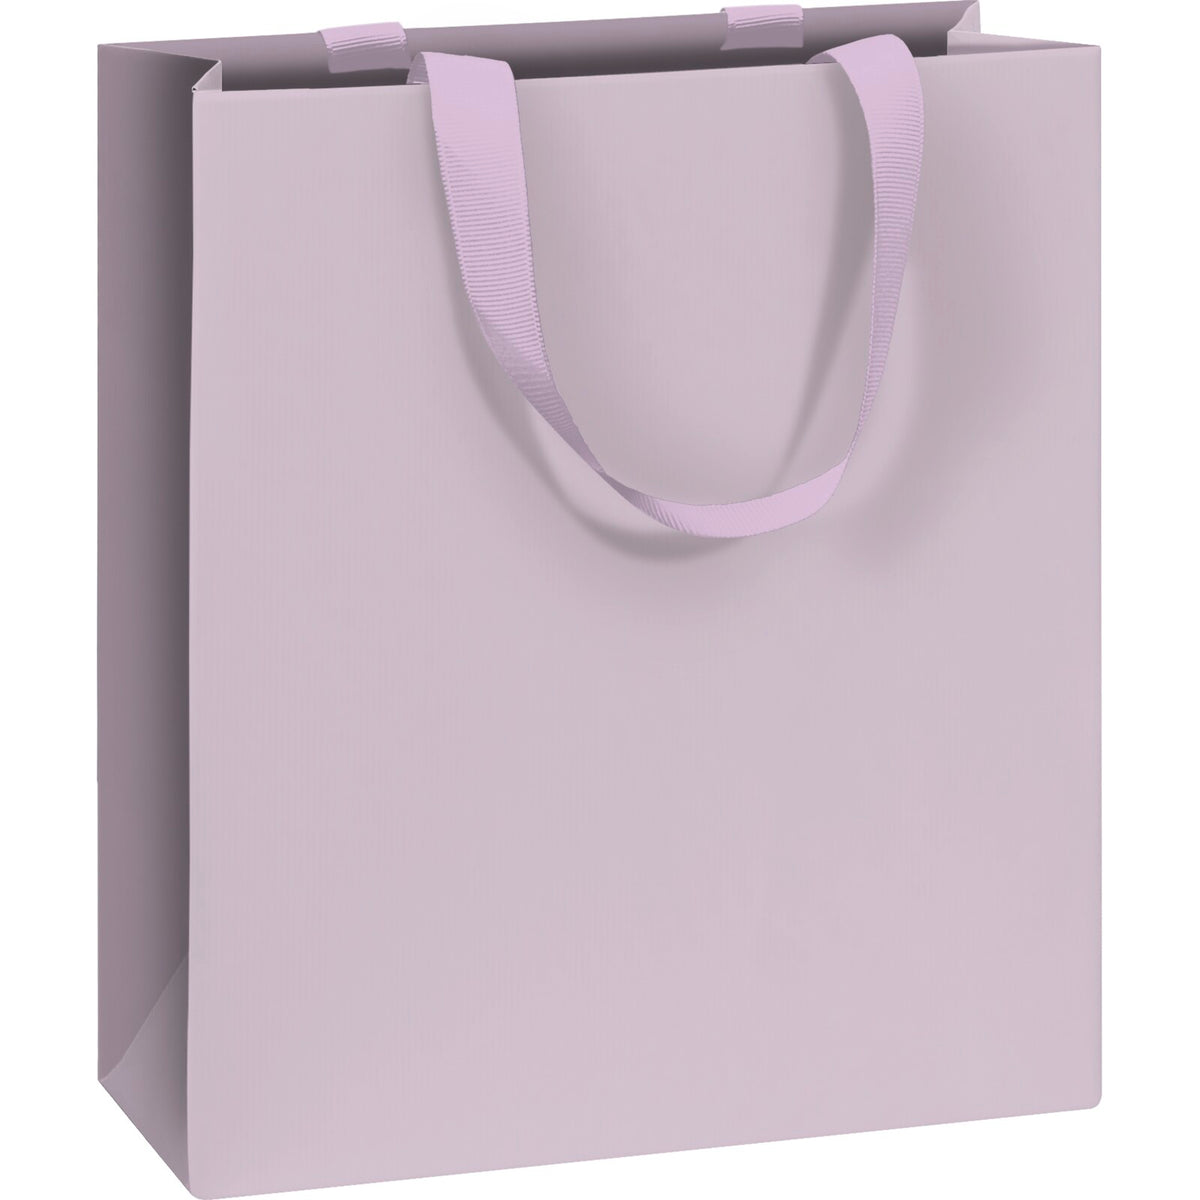 Misty Lilac Medium Gift Bag by penny black